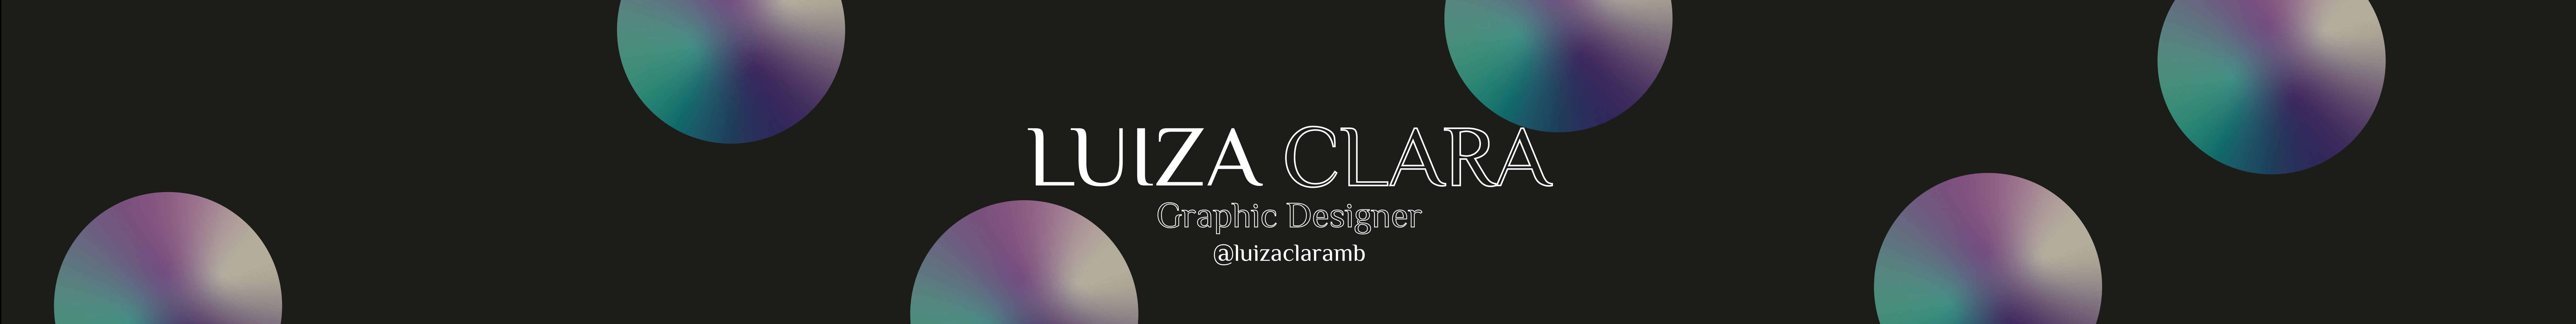 Luiza Clara's profile banner